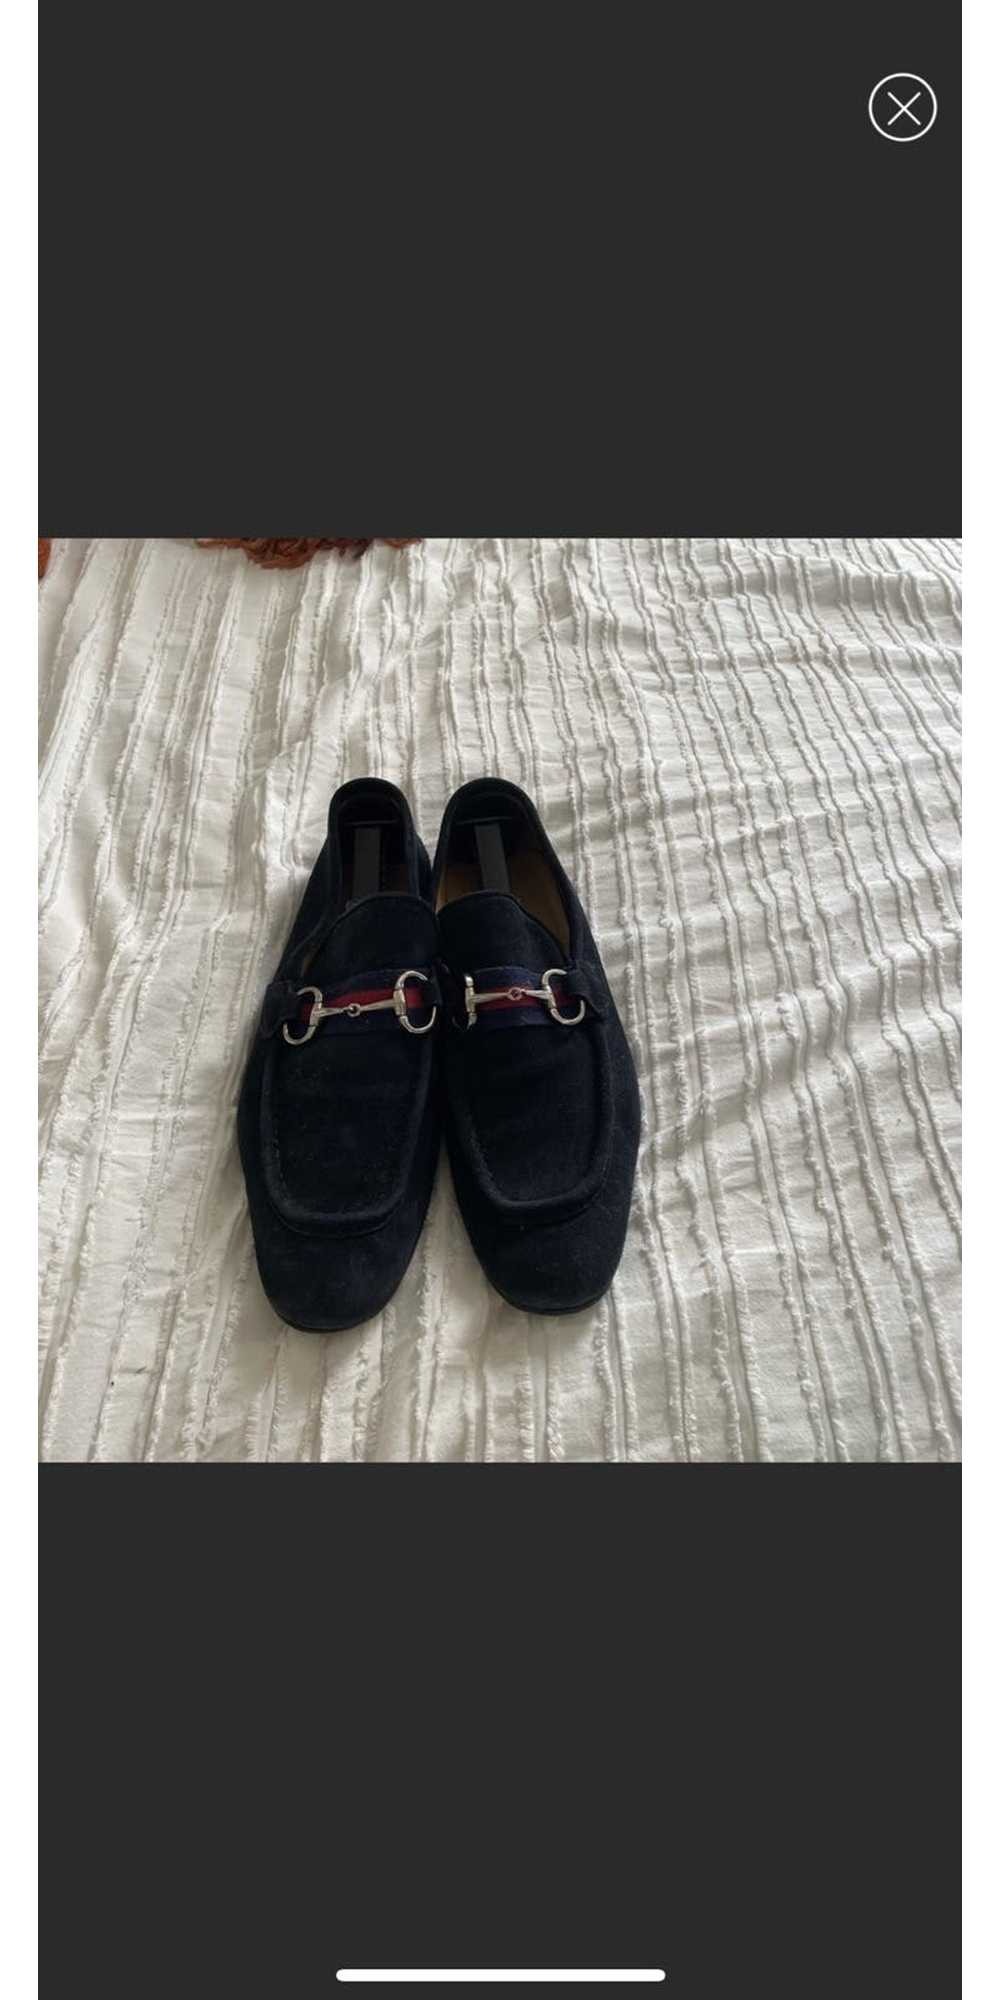 Gucci Gucci loafers - image 3